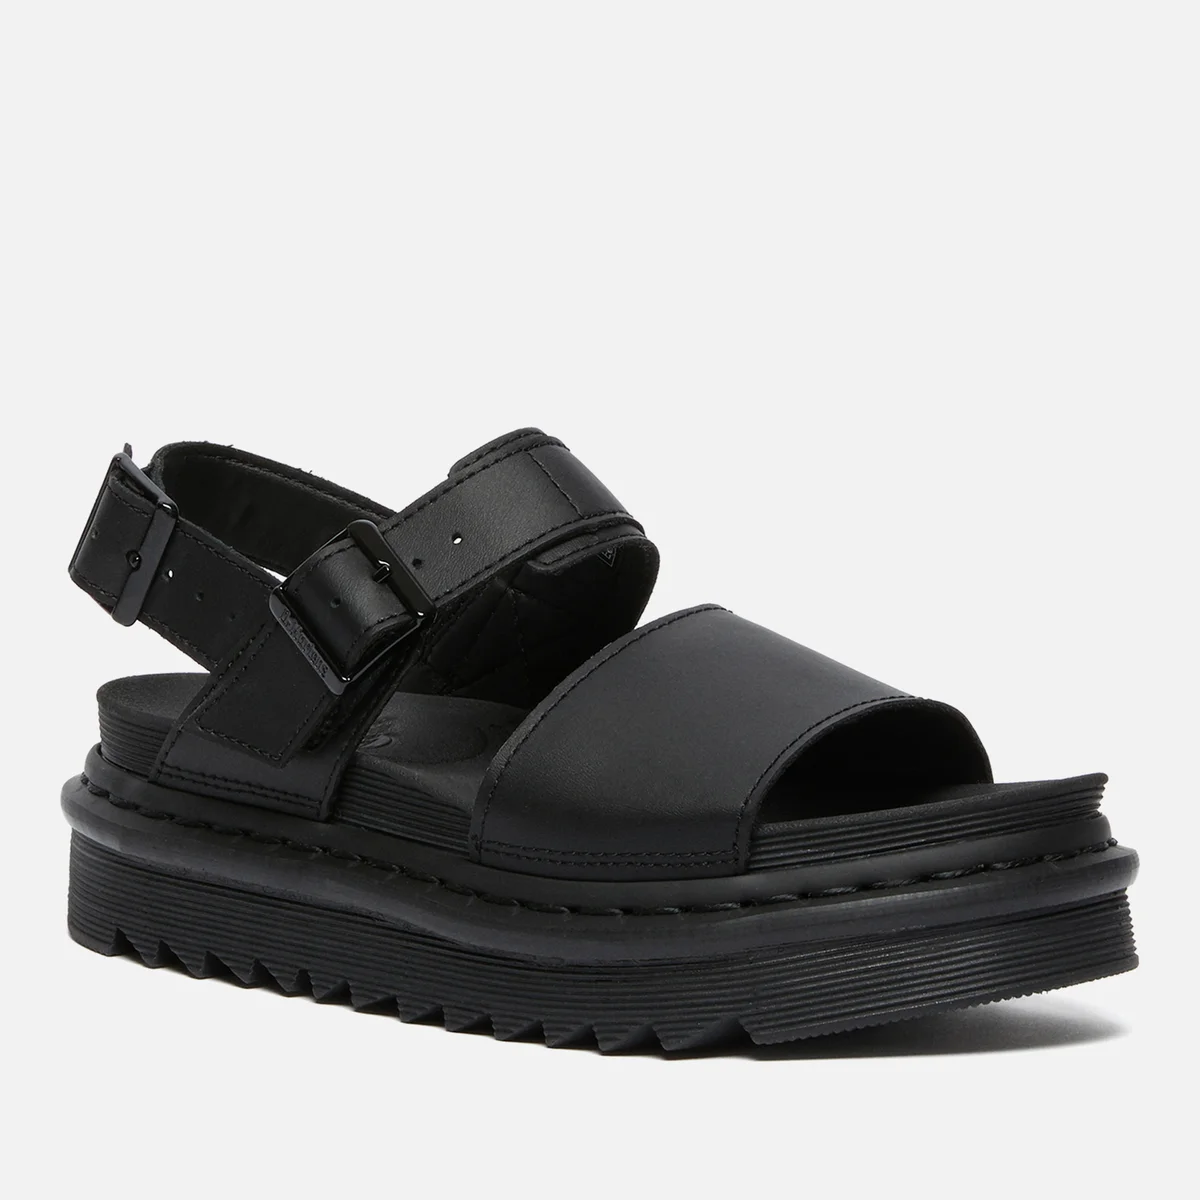 Dr. Martens Women's Voss Leather Strap Sandals - Black Image 1